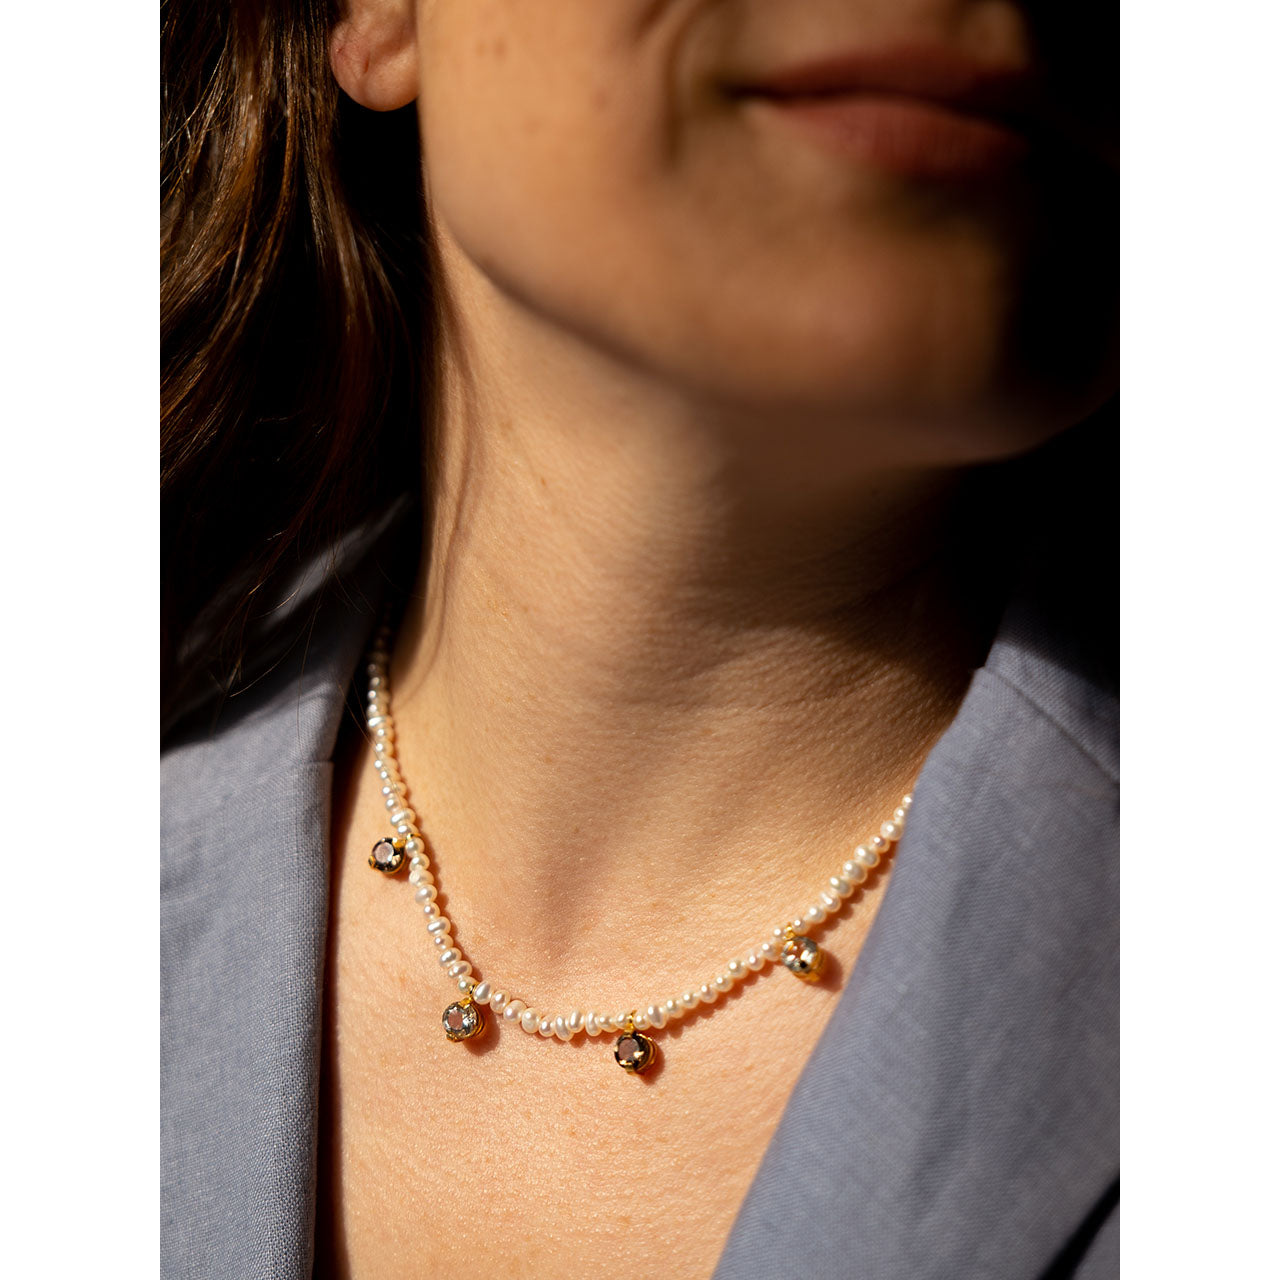 Four of A Kind necklace - Saskia